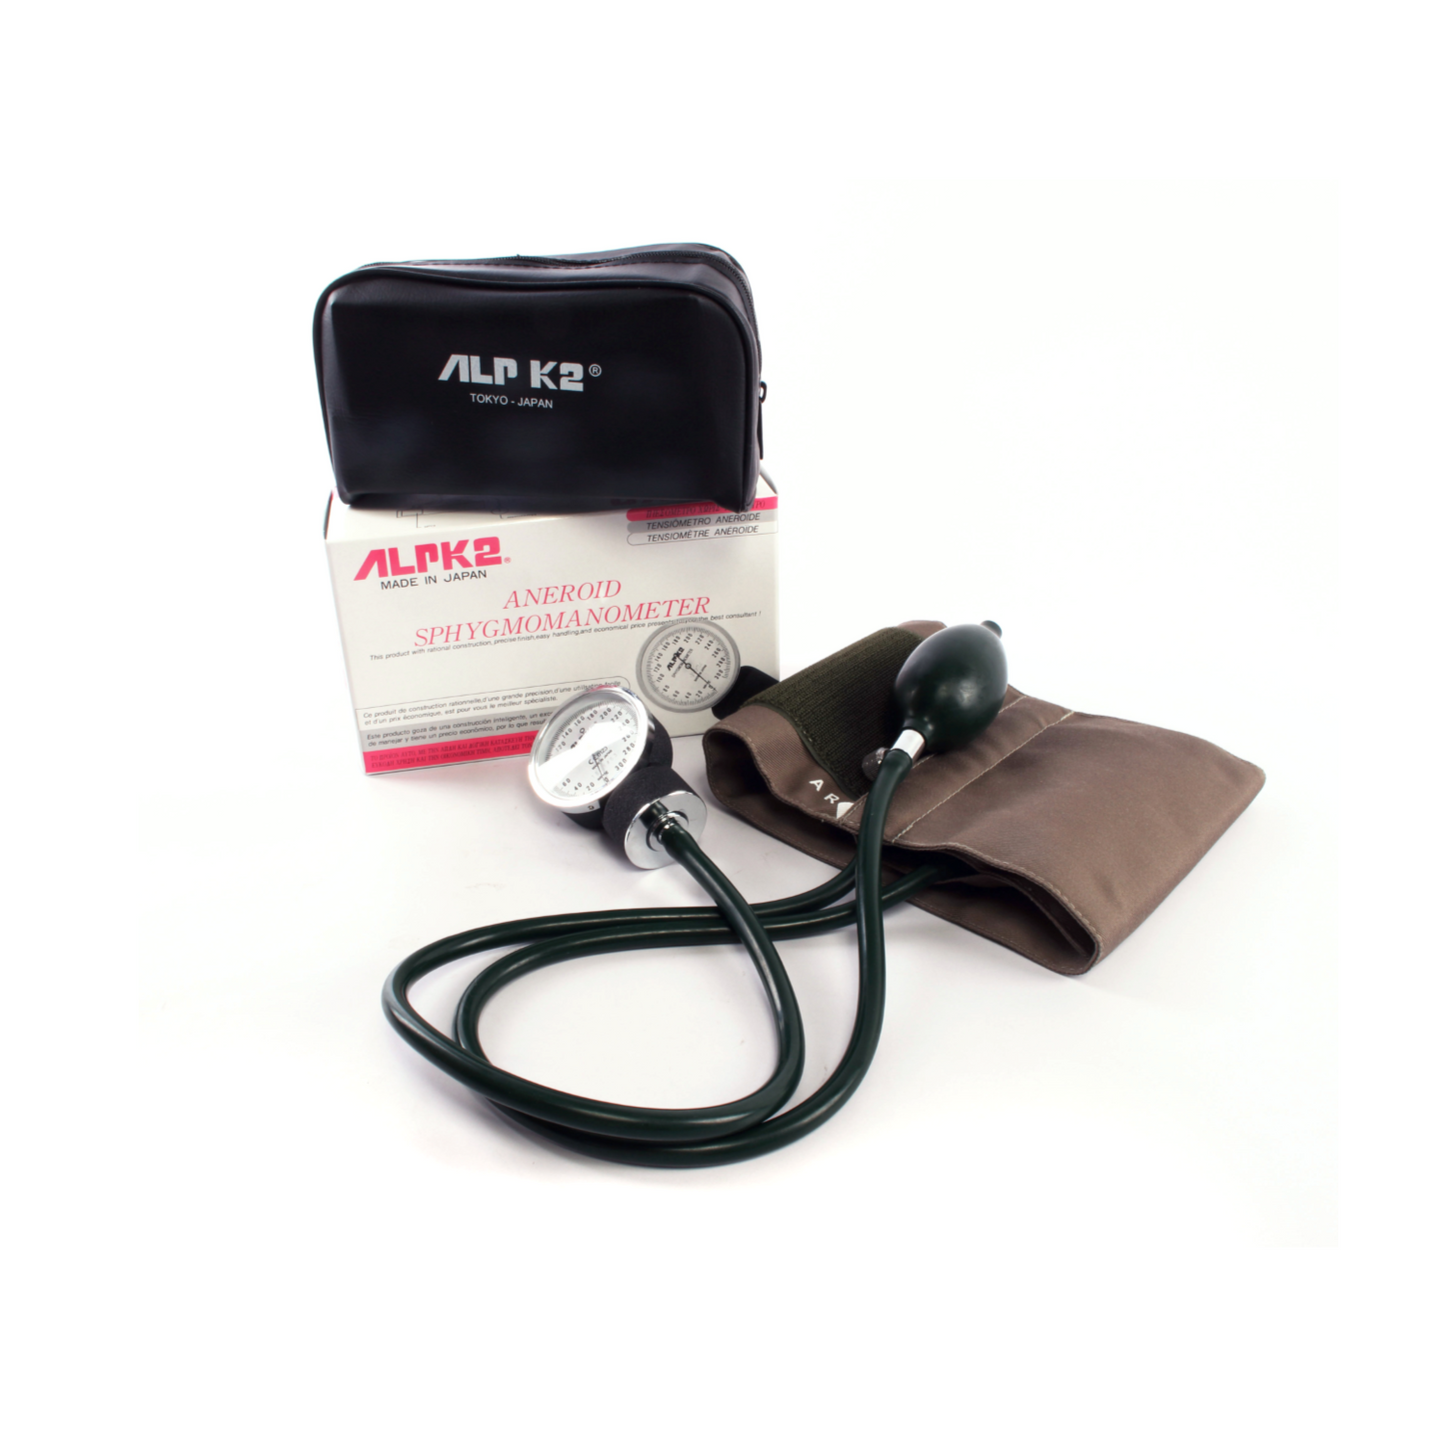 ALP K2 Aneroid Sphygmomanometer Pocket Model